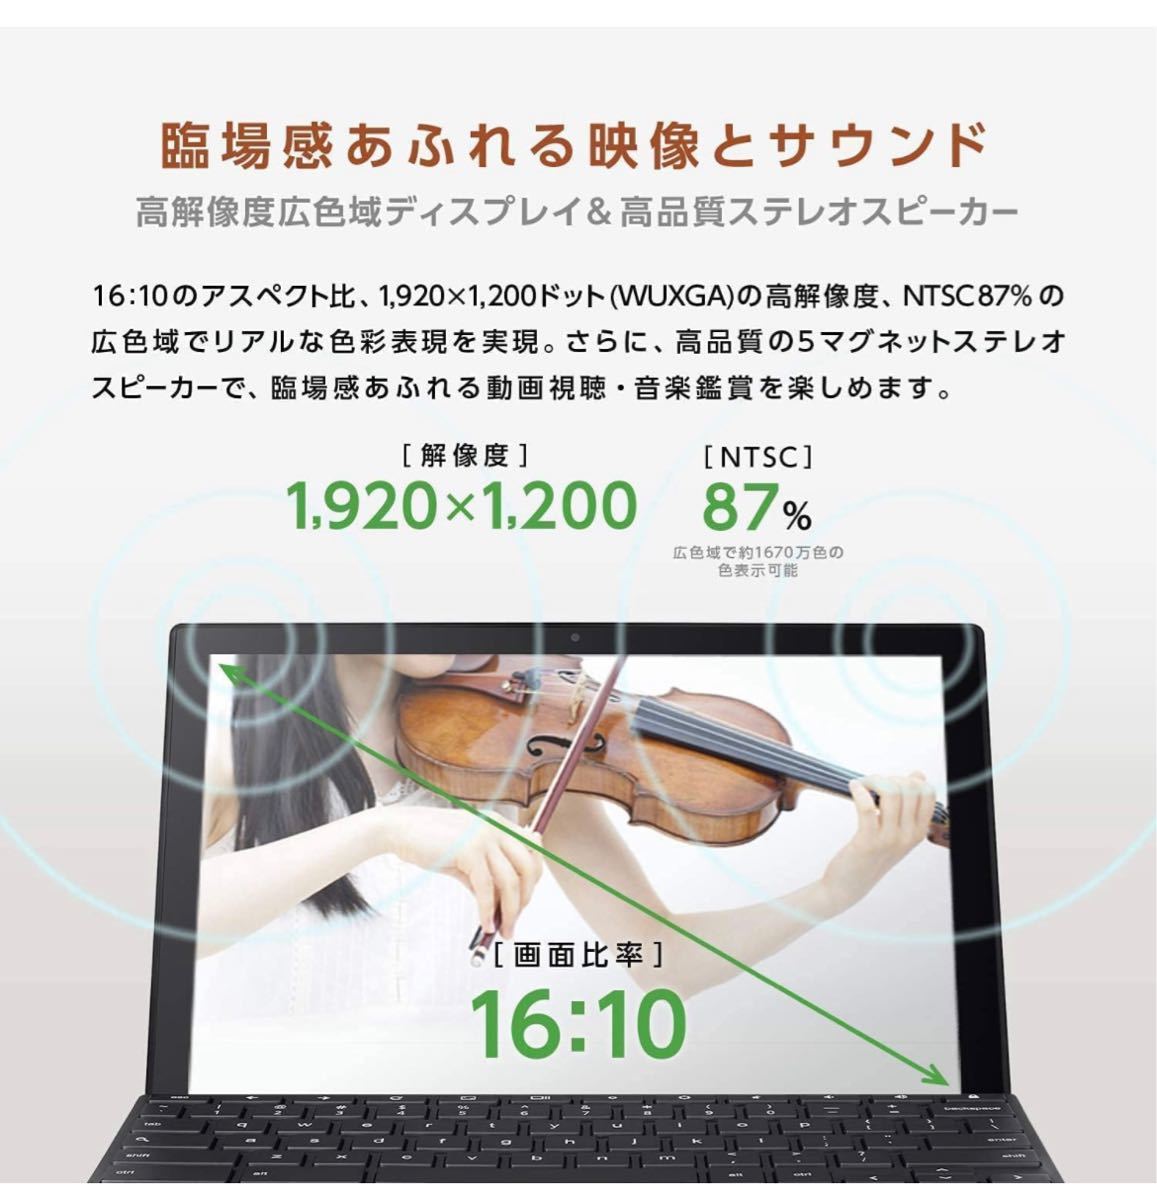 ASUS Chromebook Detachable CM3 ノートパソコン 10.5インチ 128GB